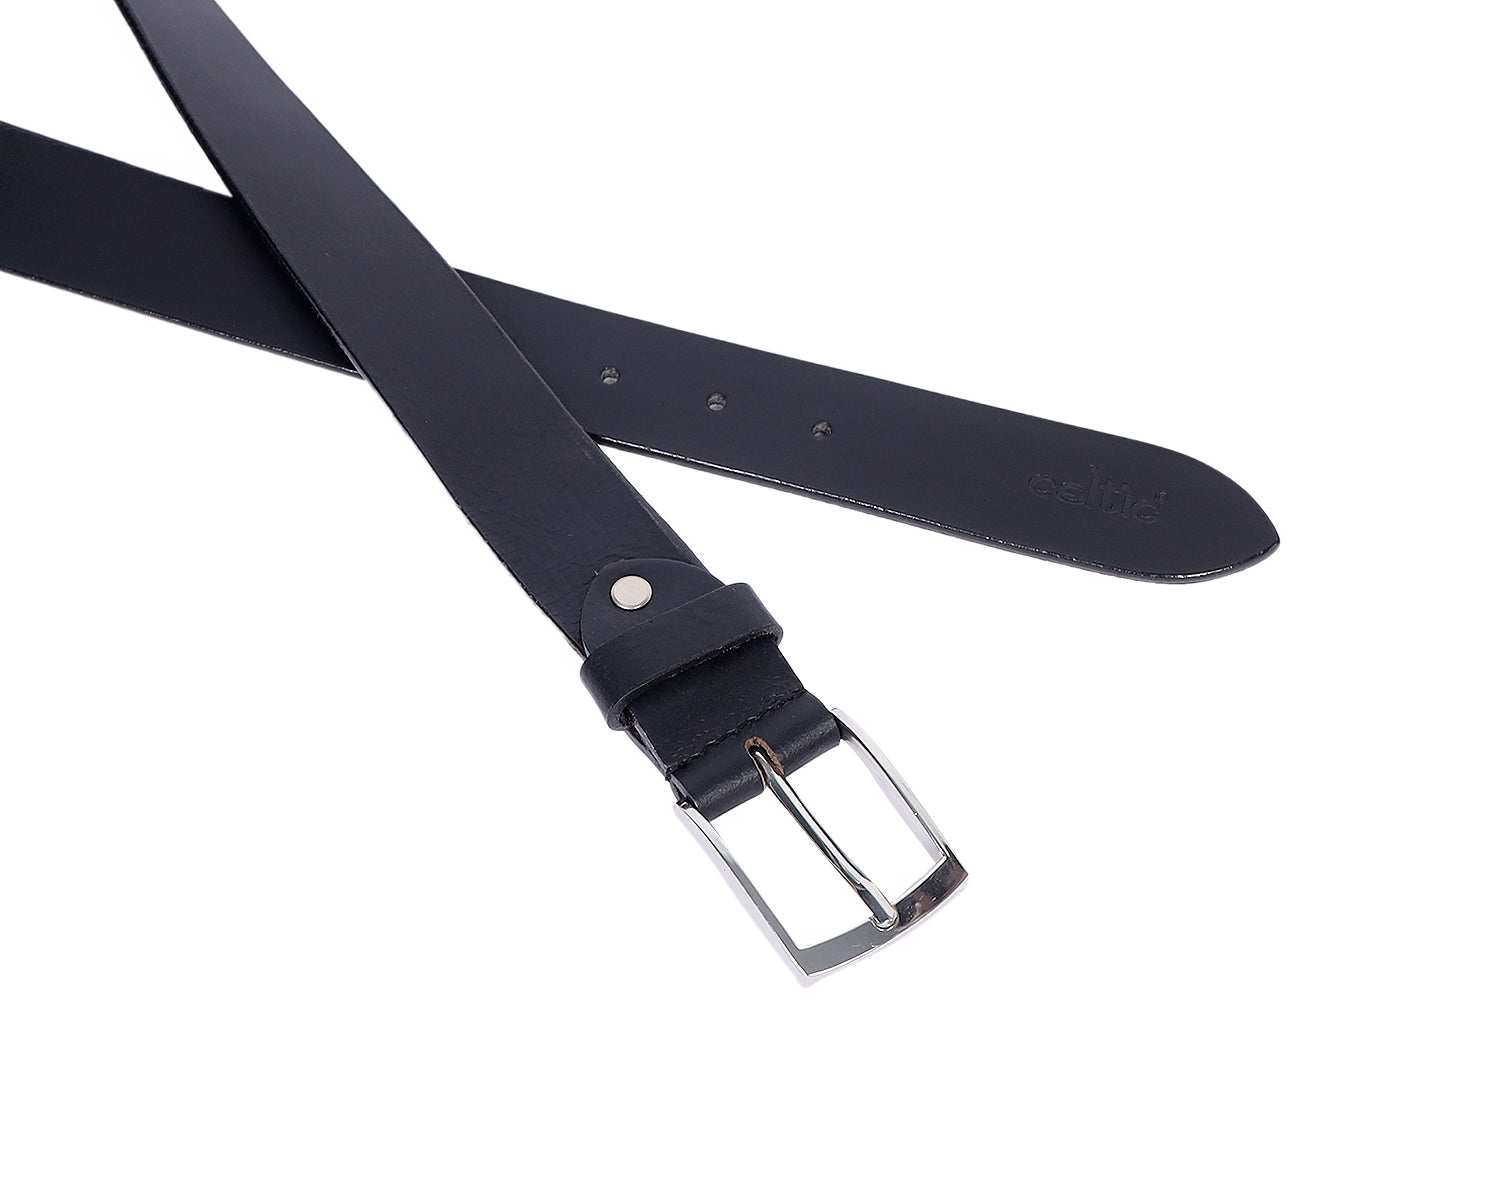 Celtic 35MM Black Premium Leather Belt - CELTICINDIA